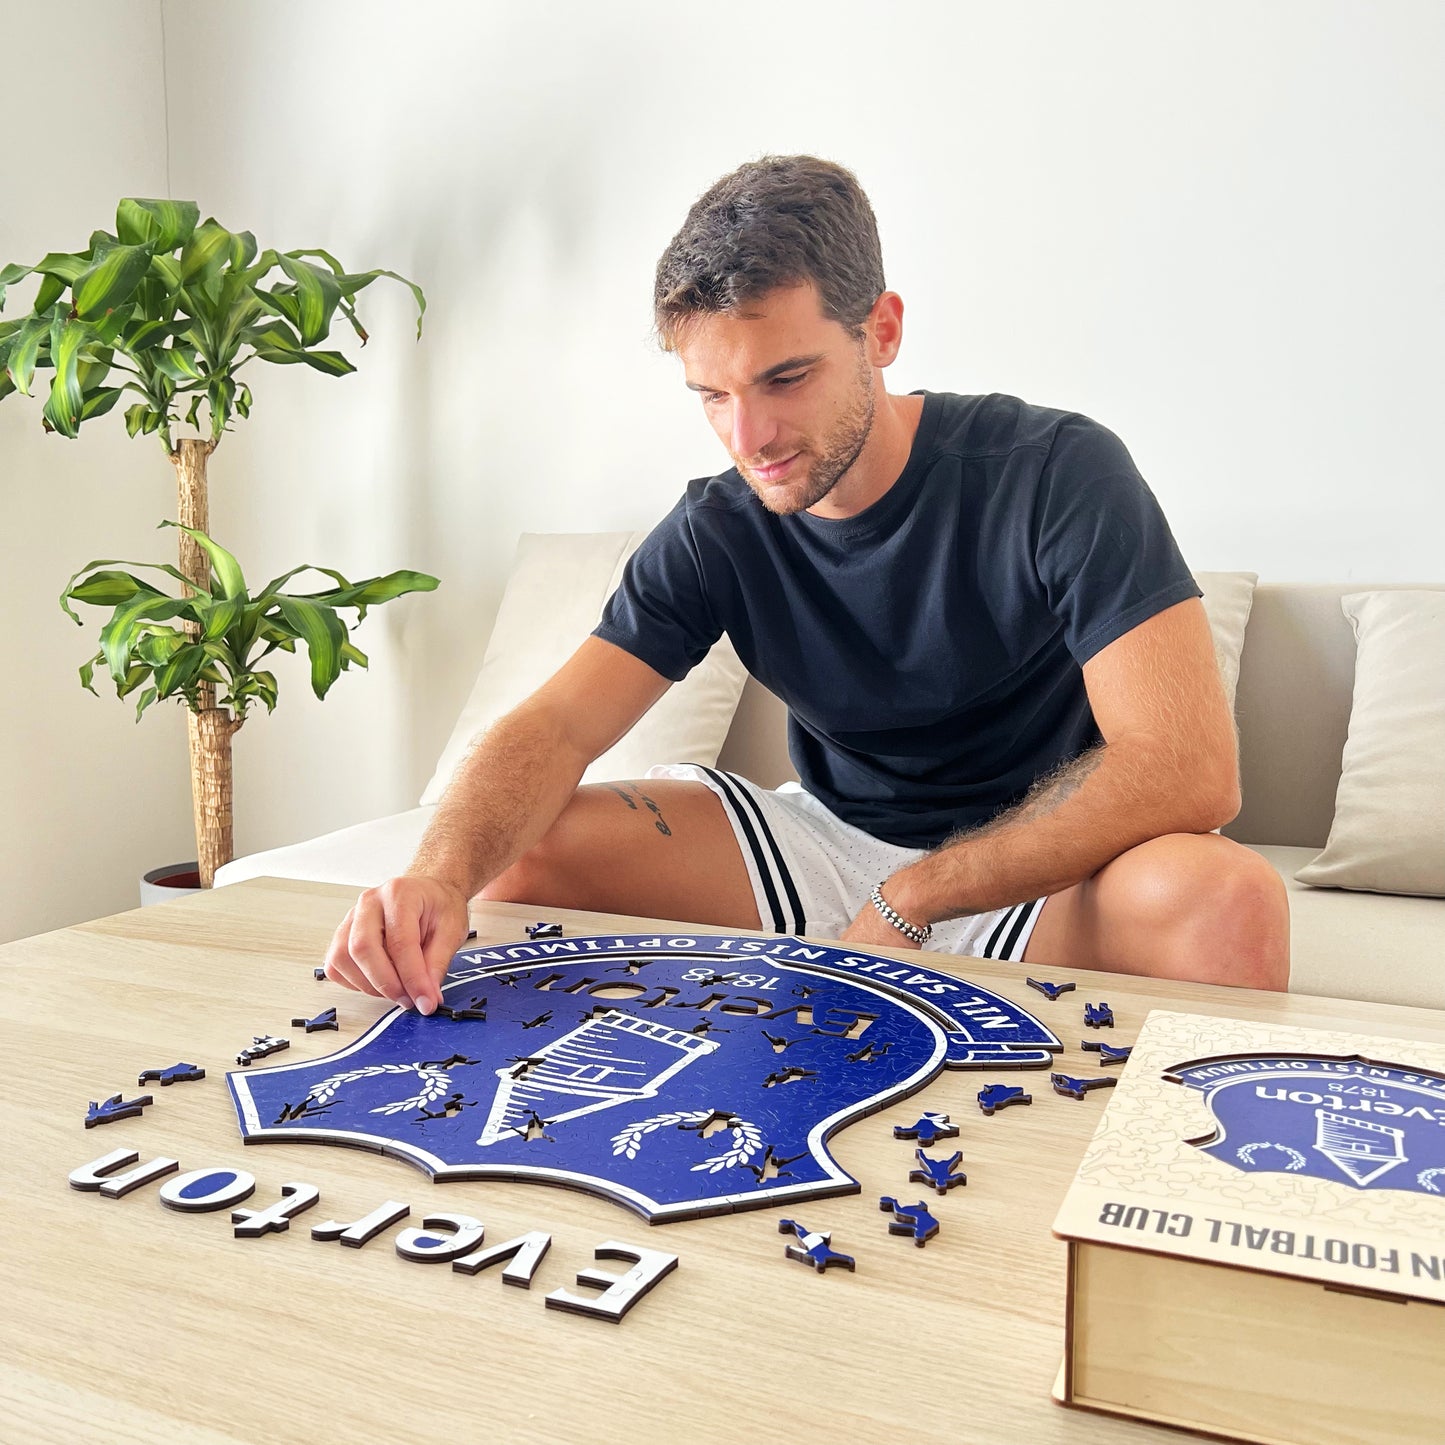 Everton FC® Logo - Wooden Puzzle